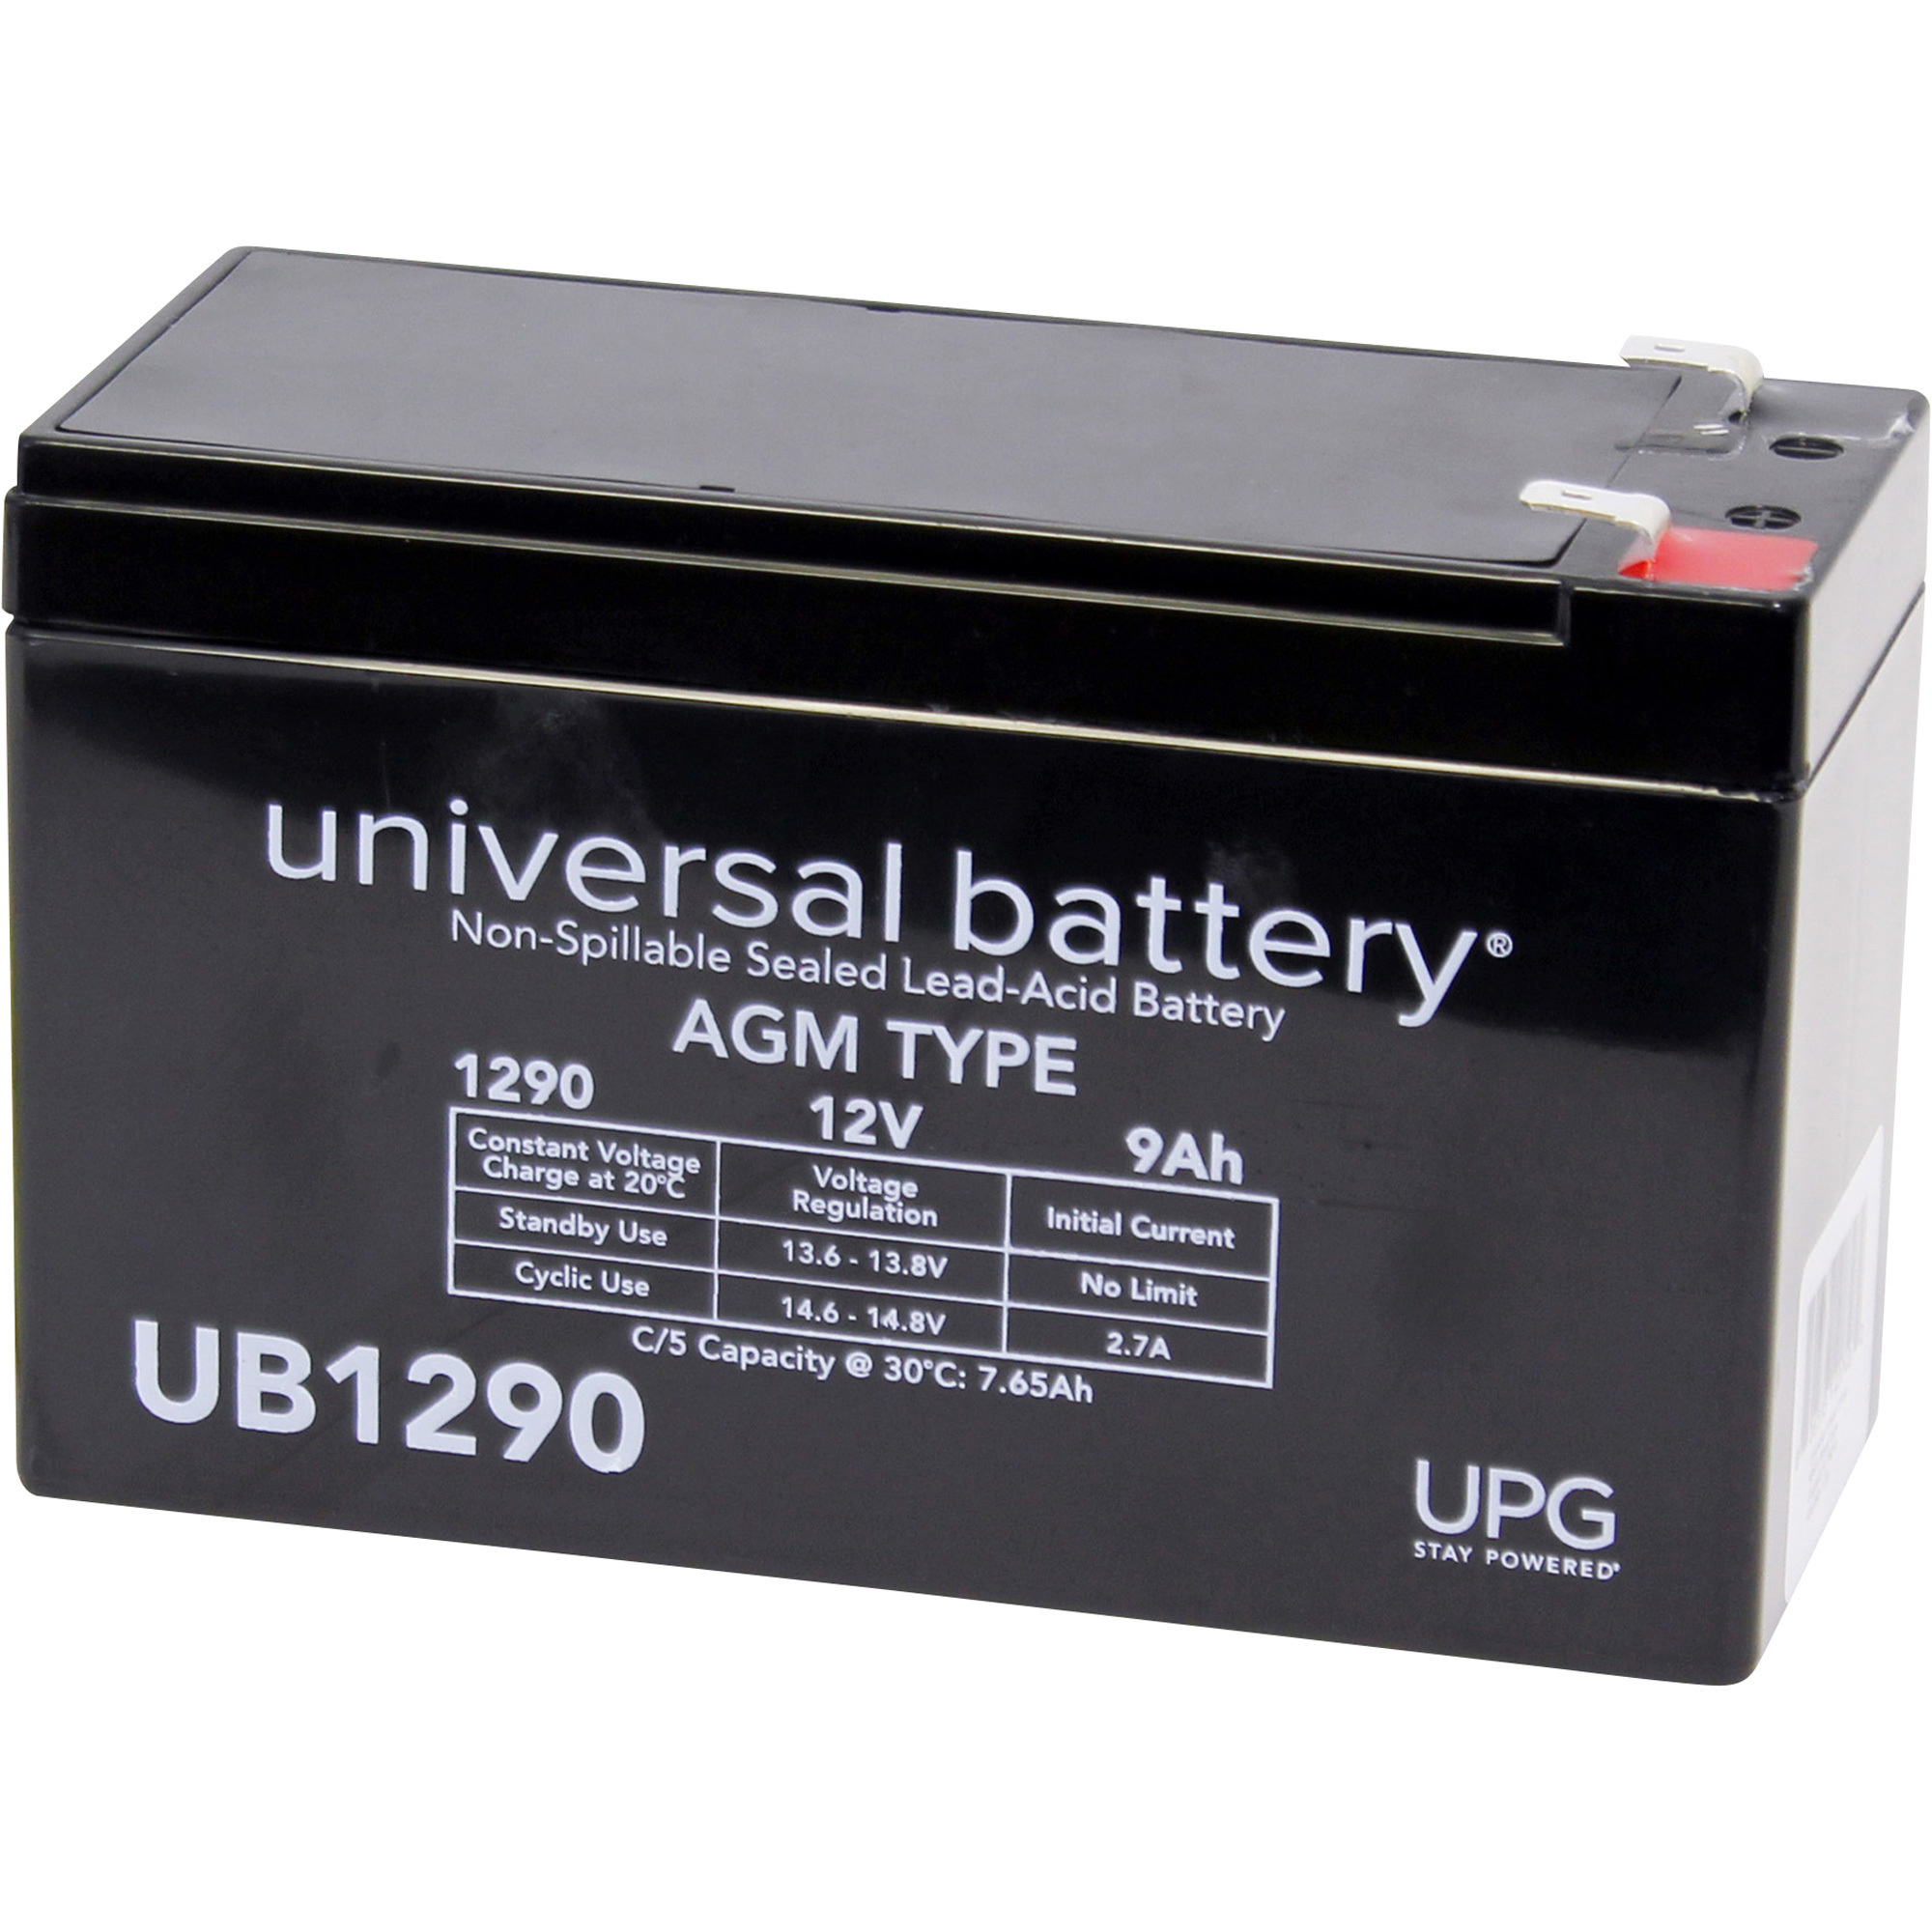 UPG Universal Sealed Lead-Acid Battery, AGM-type, 12V, 9 Amps, Model# UB1290